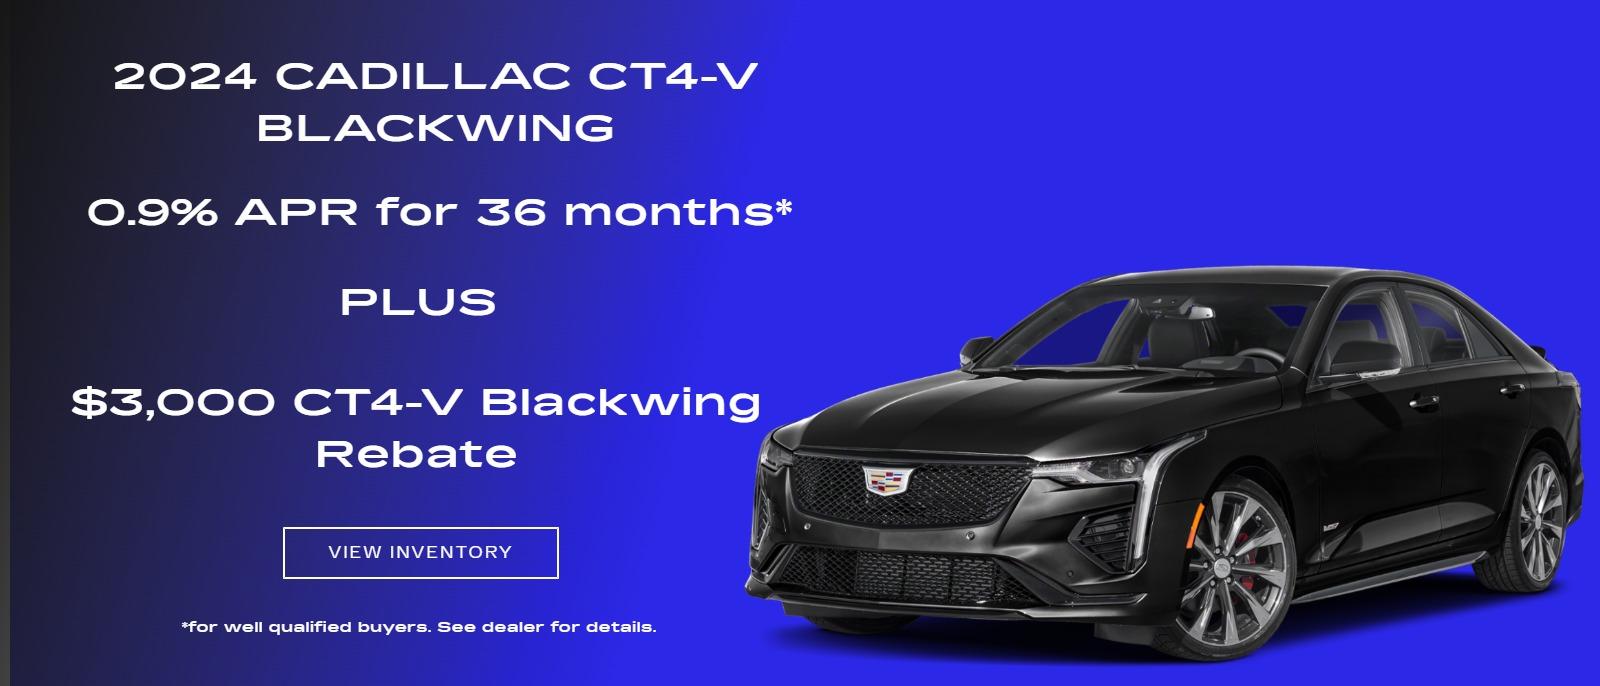 2024 Cadillac CT-4V Blackwing 0.9% APR plus $3K rebate